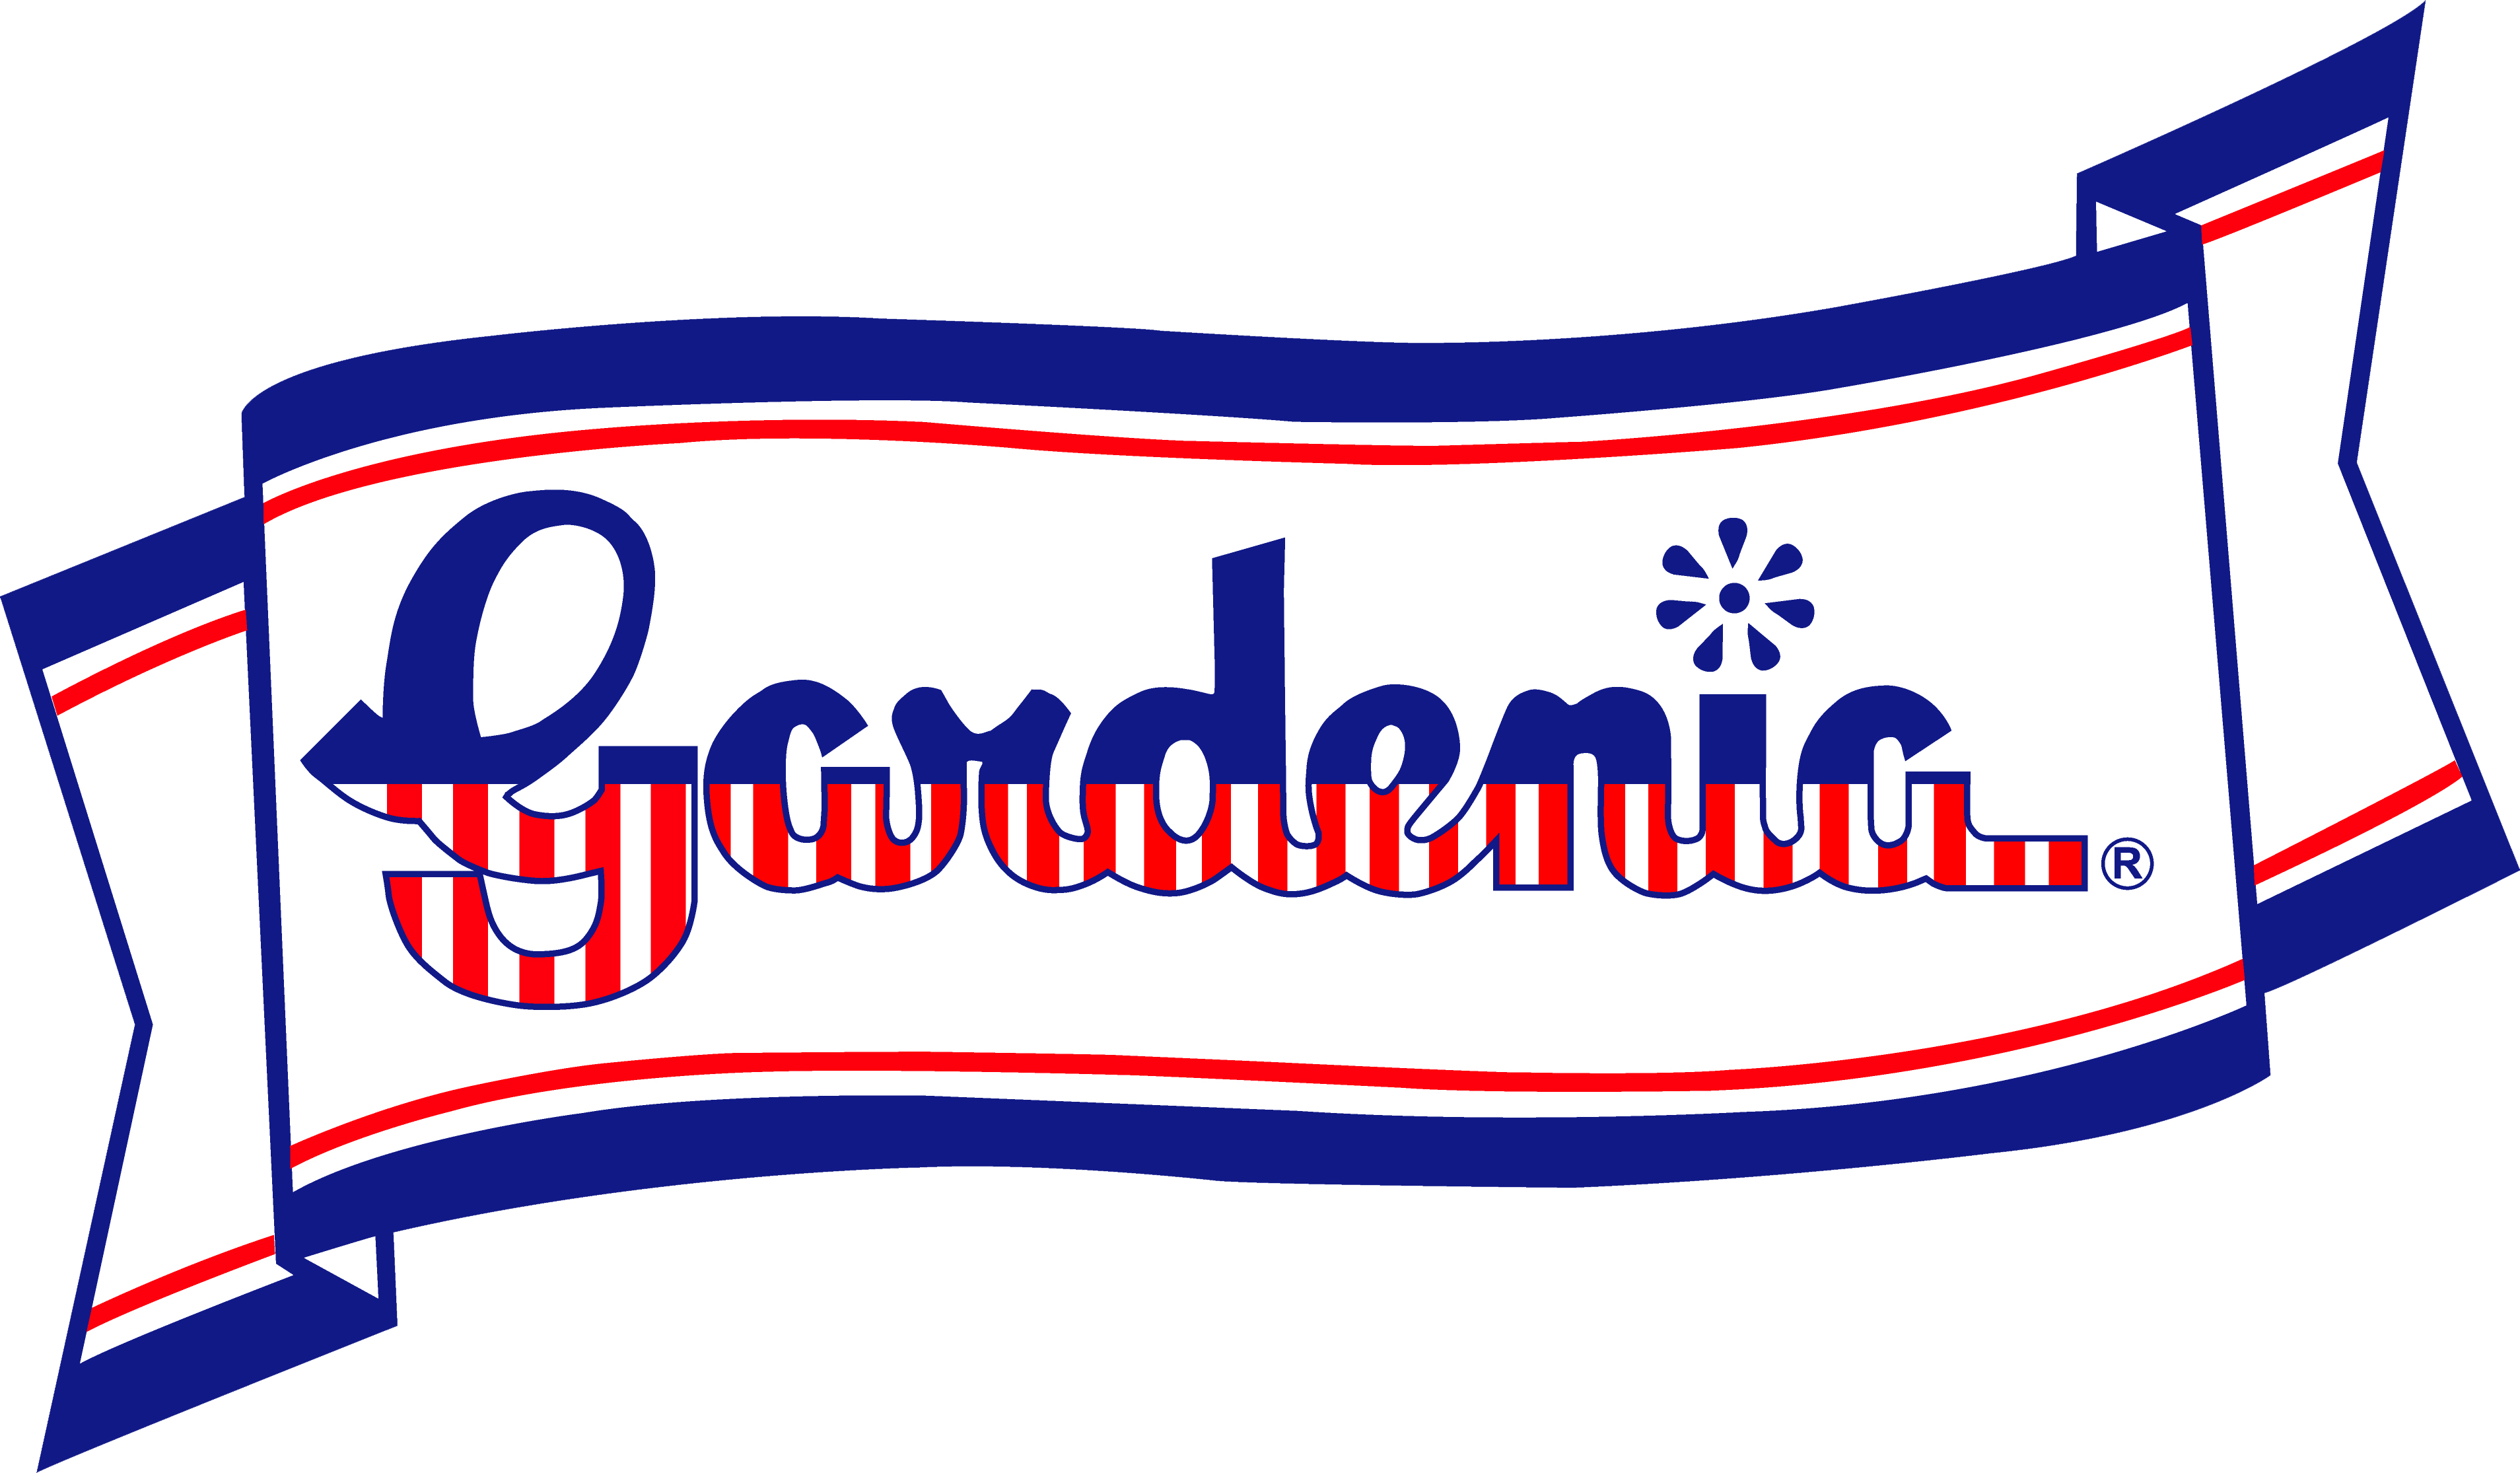 Gardenia Expands Business Now Ventures To Artisanal - Gardenia Bakeries Philippines Inc (3816x2230)